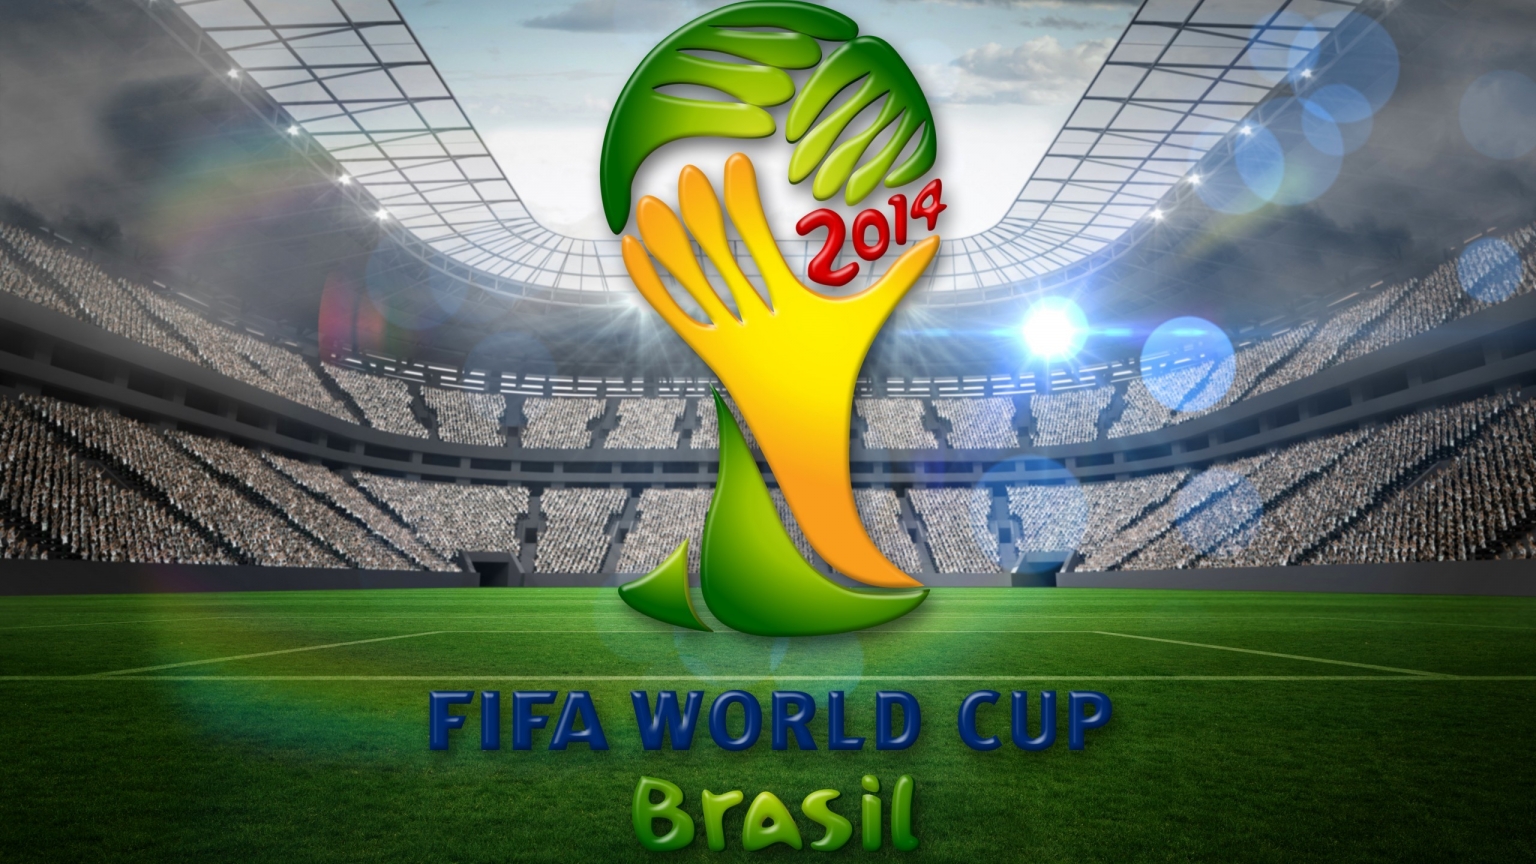 2014 Brasil World Cup for 1536 x 864 HDTV resolution